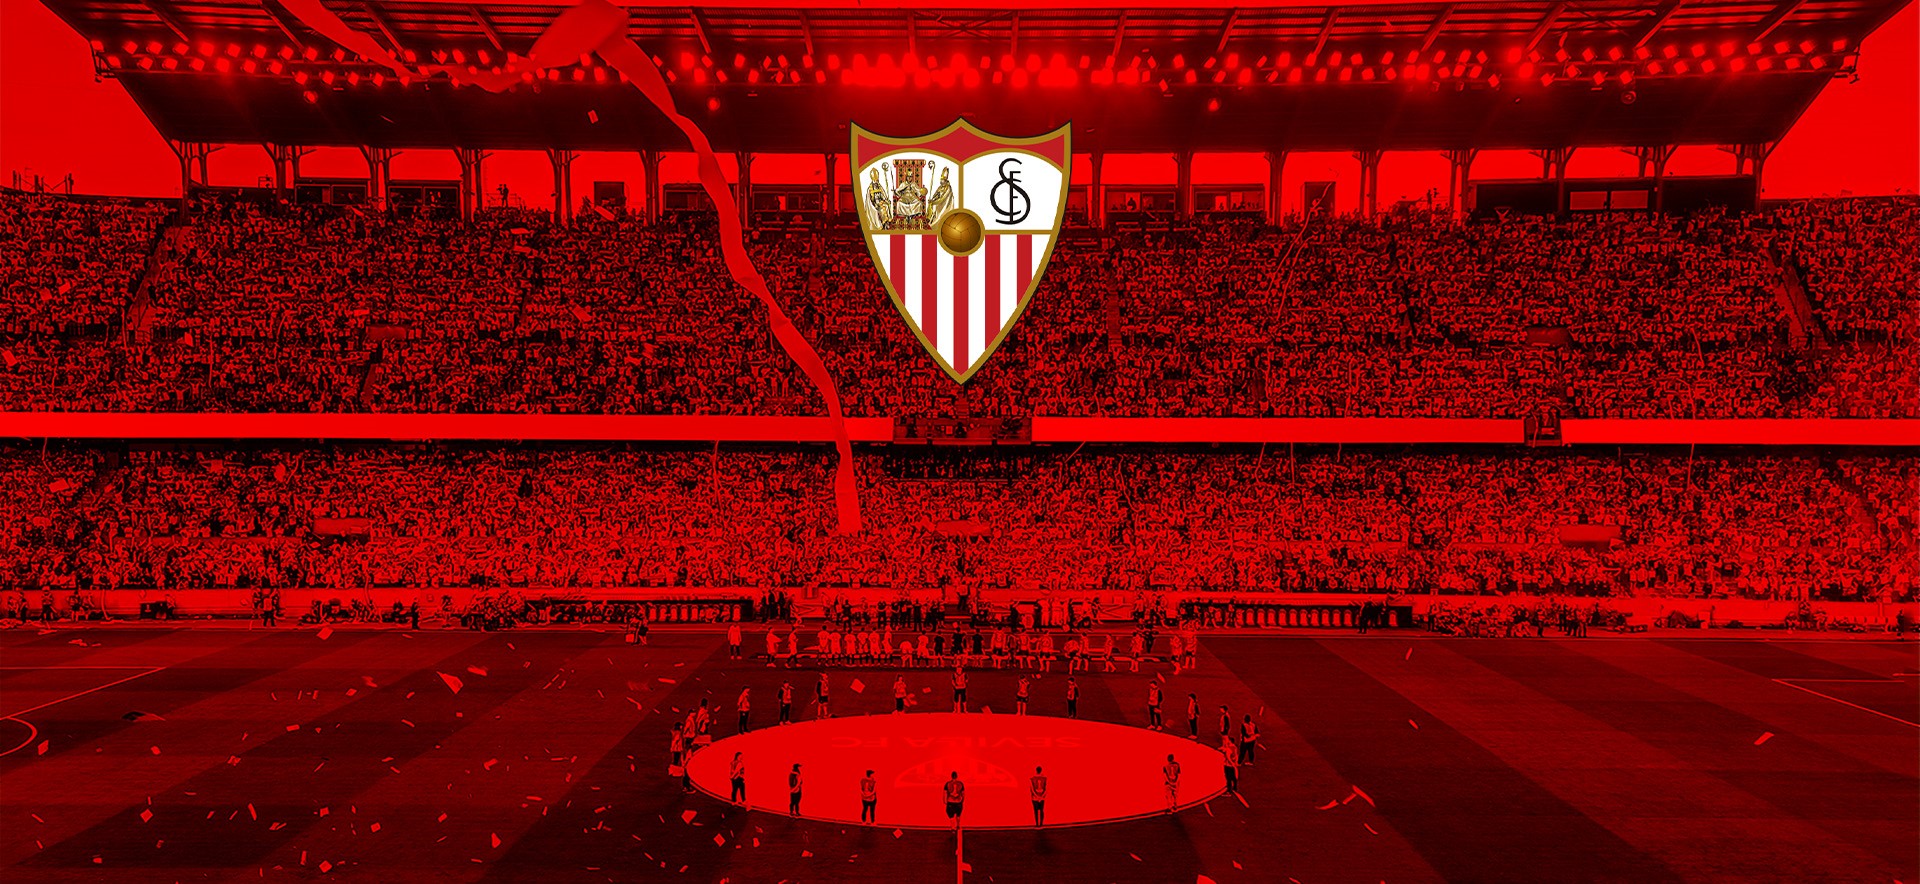 The success of the season ticket campaign, the latest milestone in the digital transformation of Sevilla FC